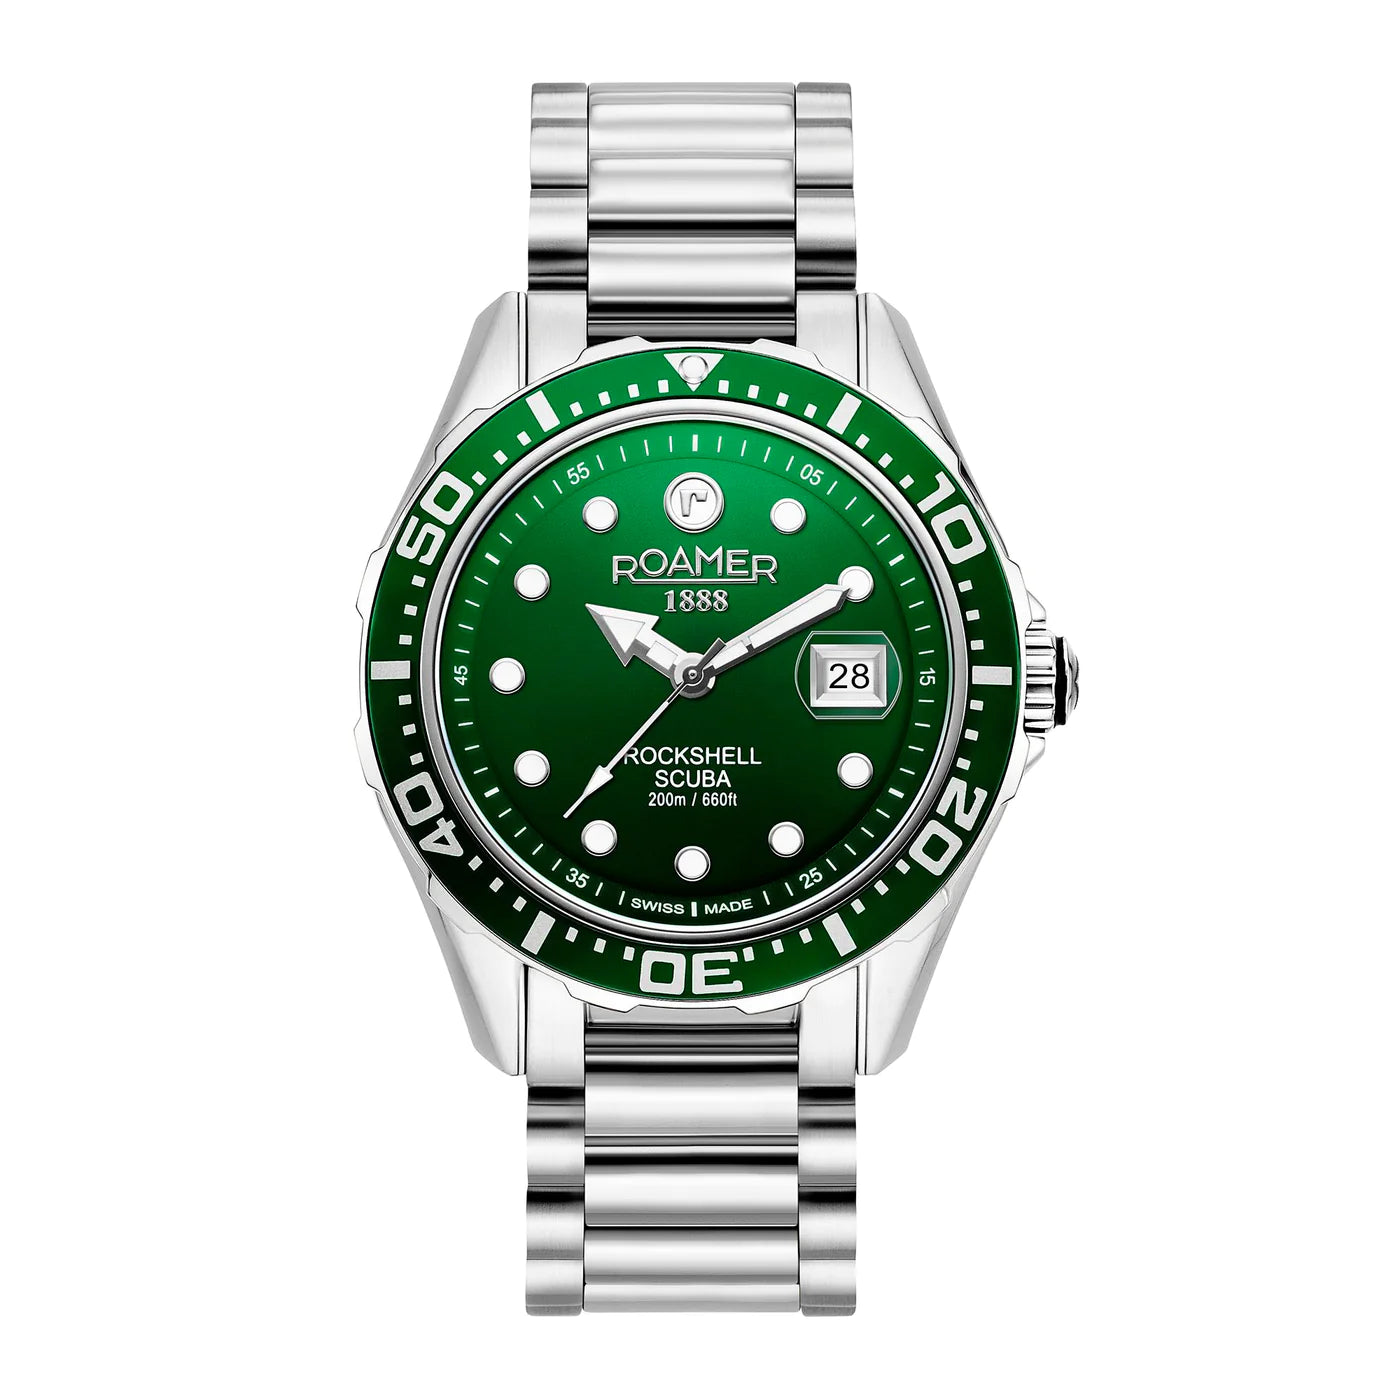 Roamer 220858 41 75 50 Rockshell Scuba Green Dial Stainless Steel Bracelet Men's Watch - mzwatcheslk srilanka